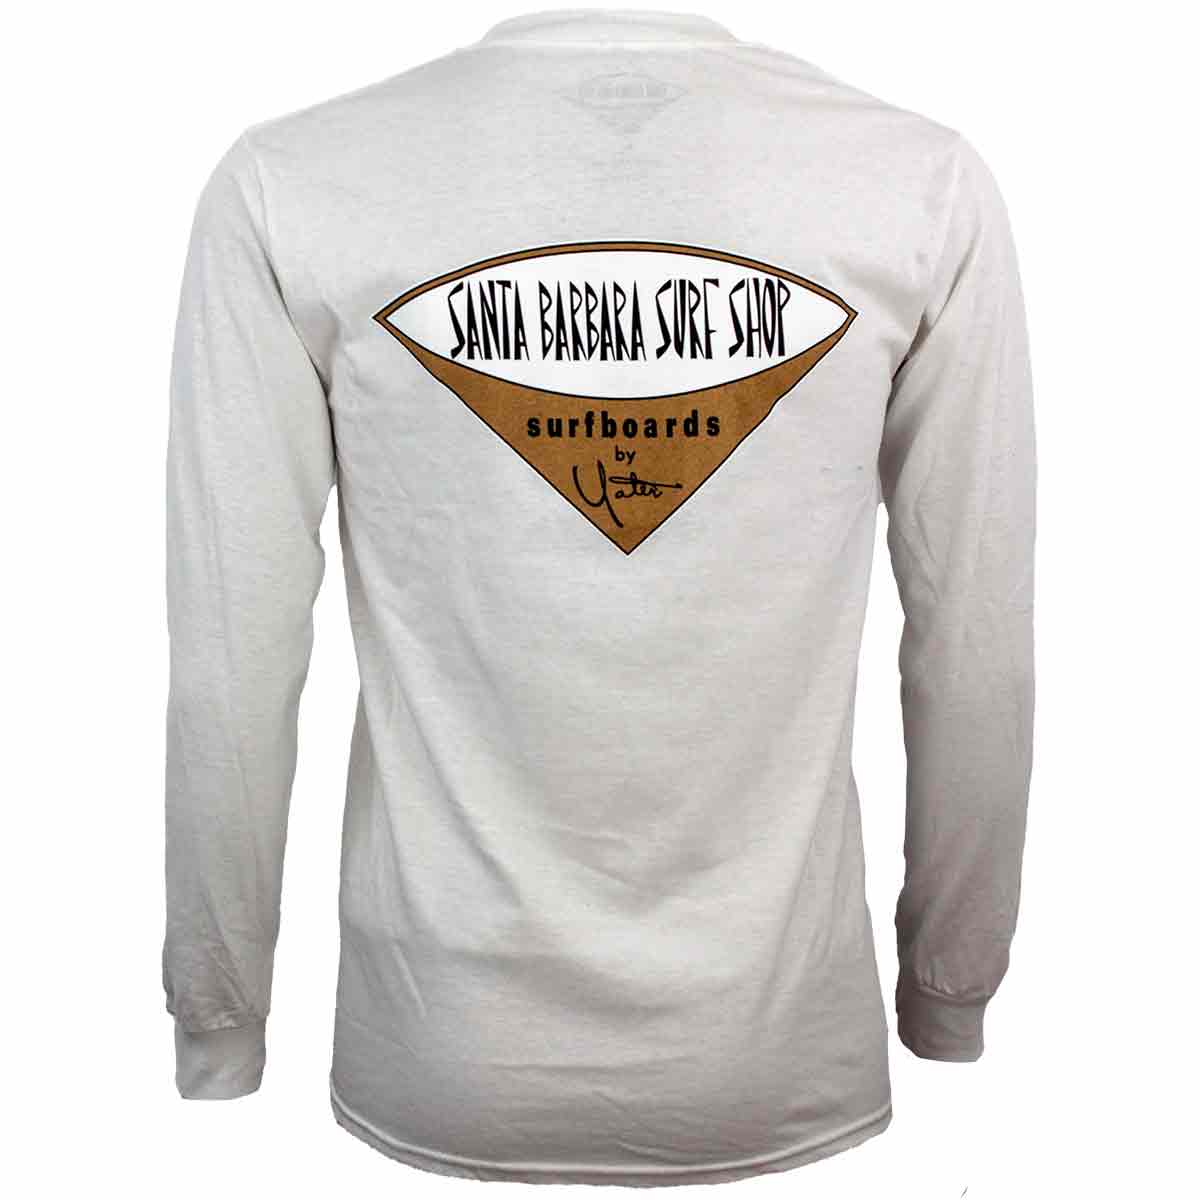 Long Sleeve T-Shirt Santa Barbara Surf Shop Logo - Surf N' Wear Beach House Online